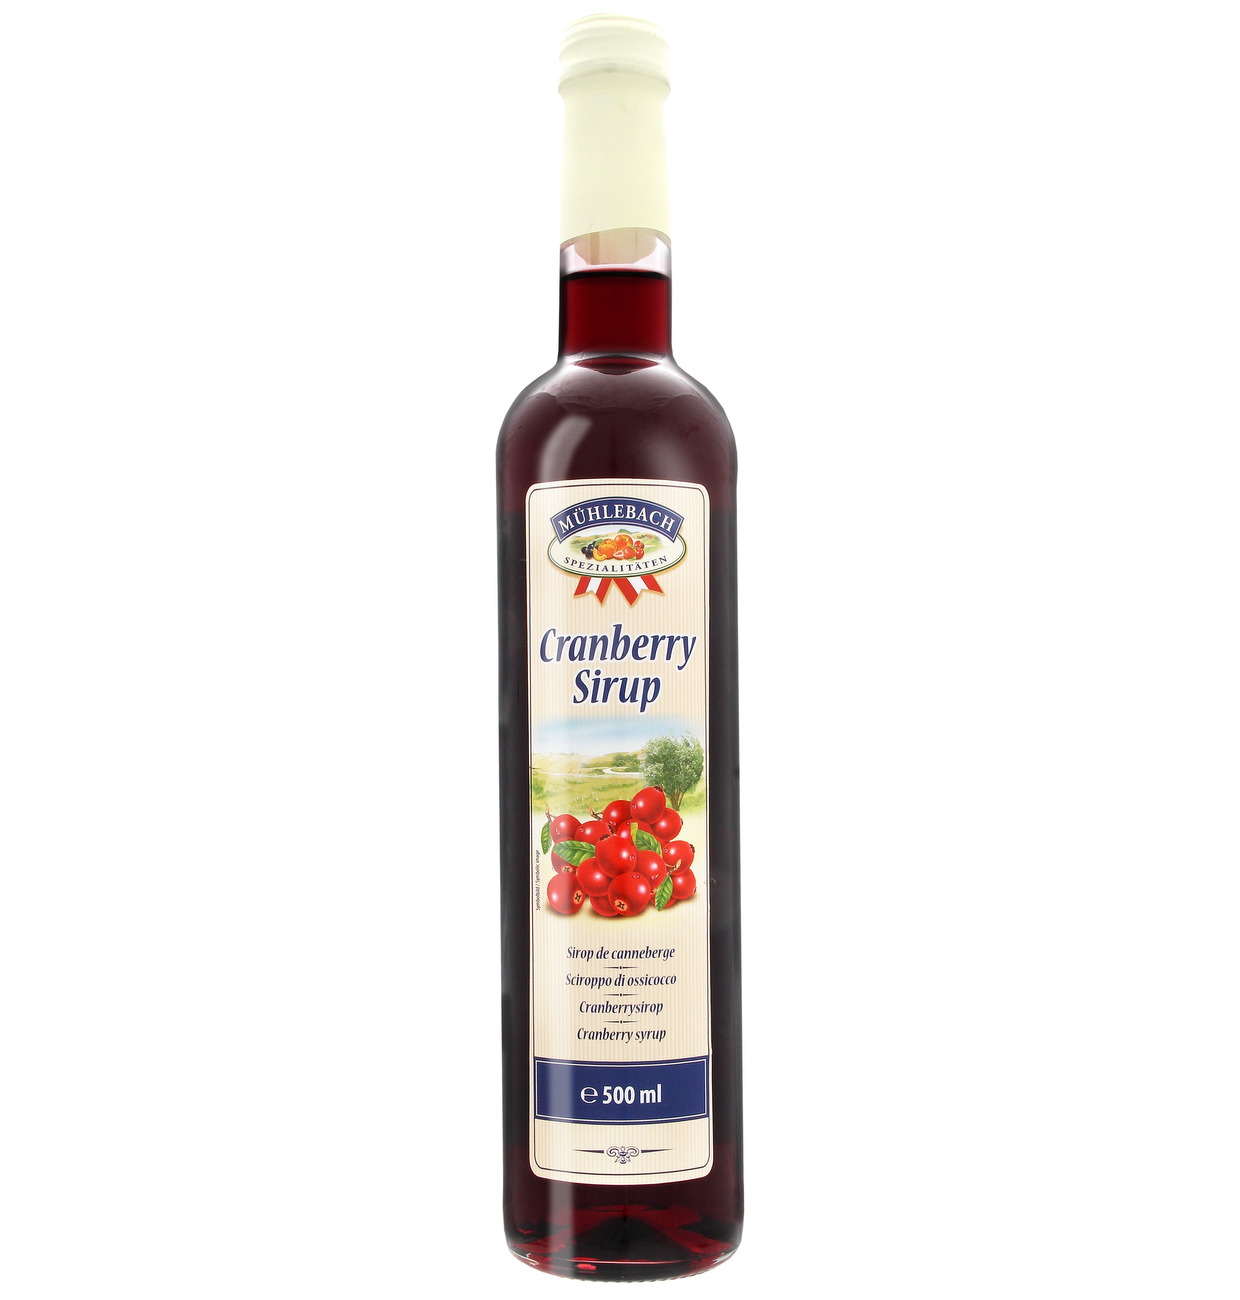 Muhlebach Cranberry syrup 500 ml